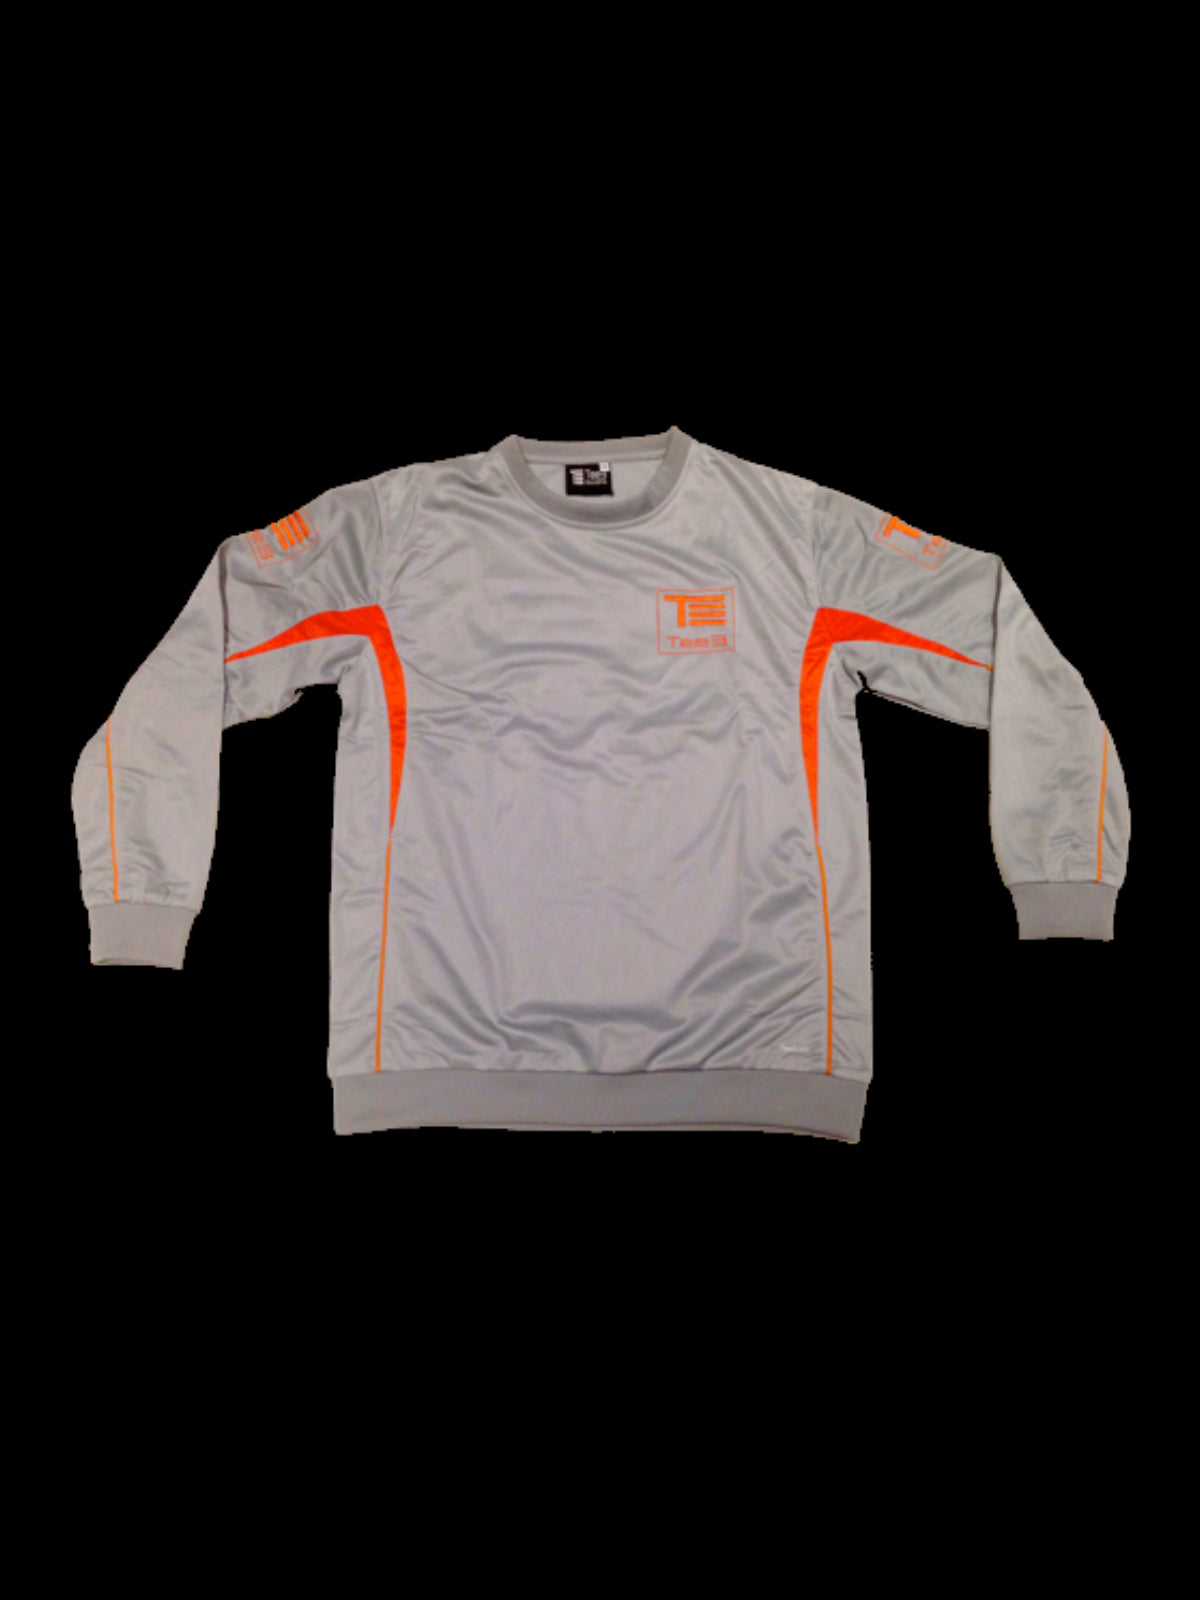 Tee3 Training Jumper - Shining Silver/Orange